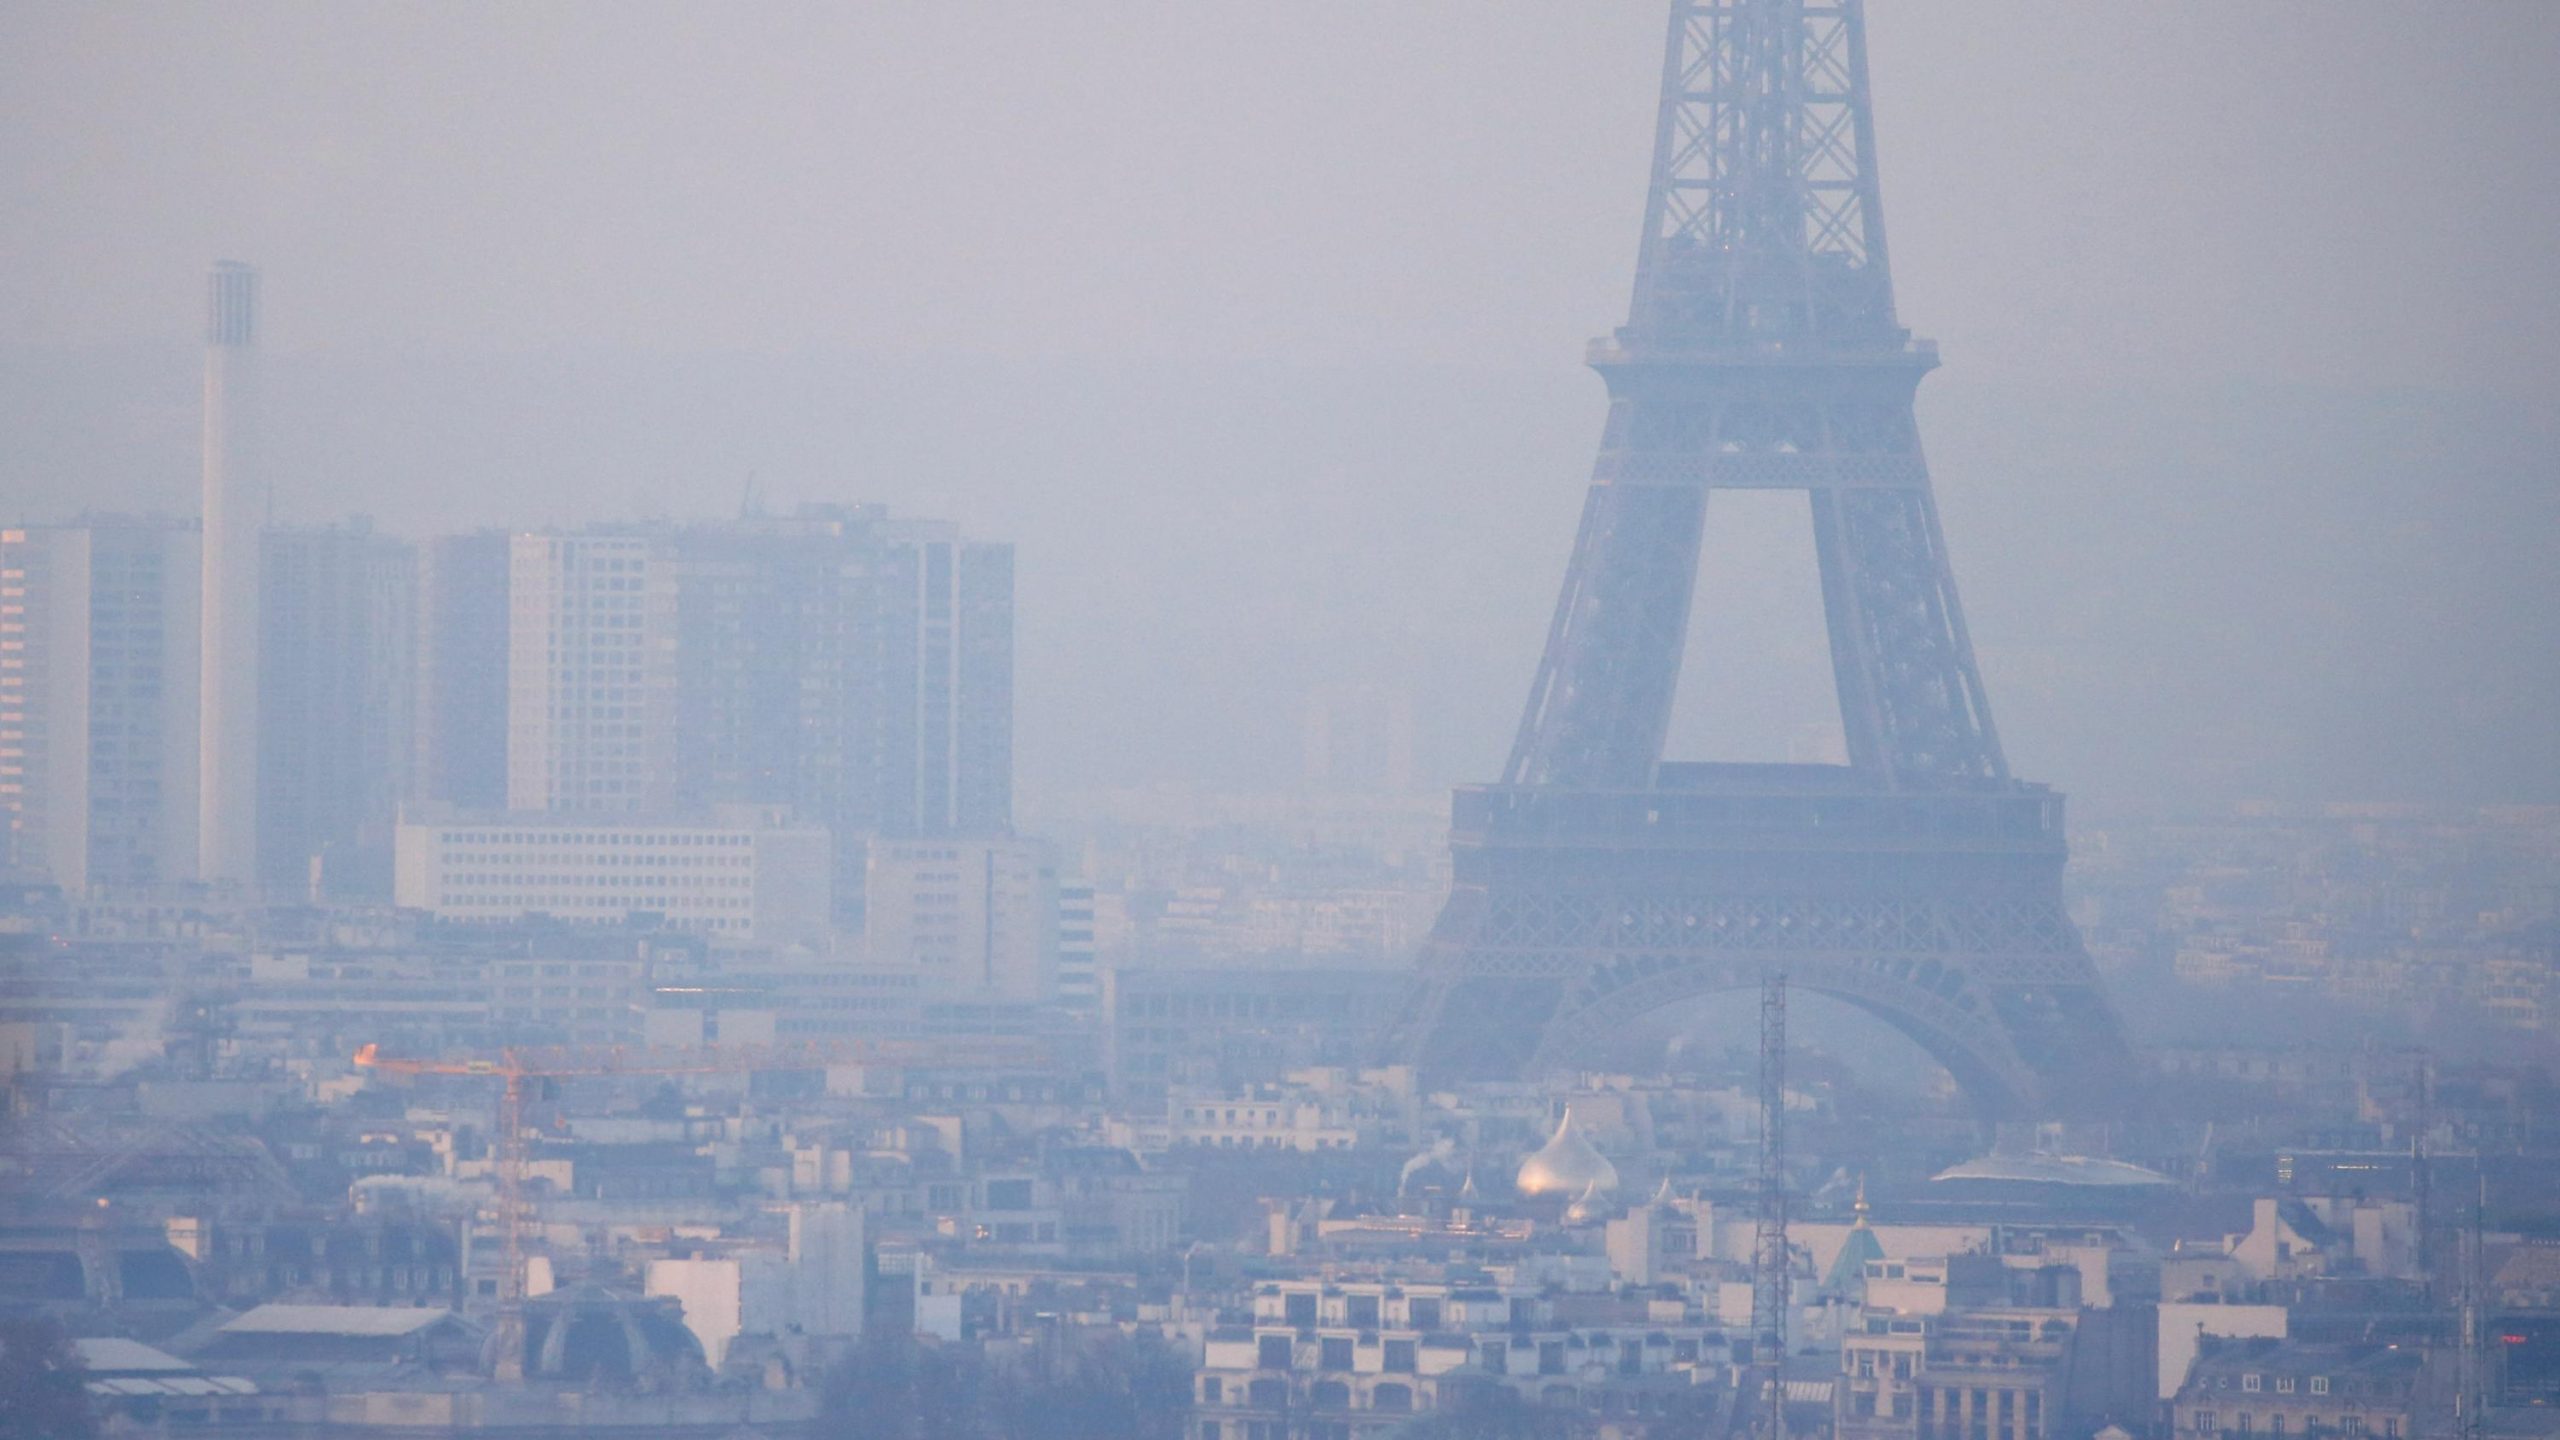 Air quality improved slightly in 2020 during lockdowns, U.N. agency says